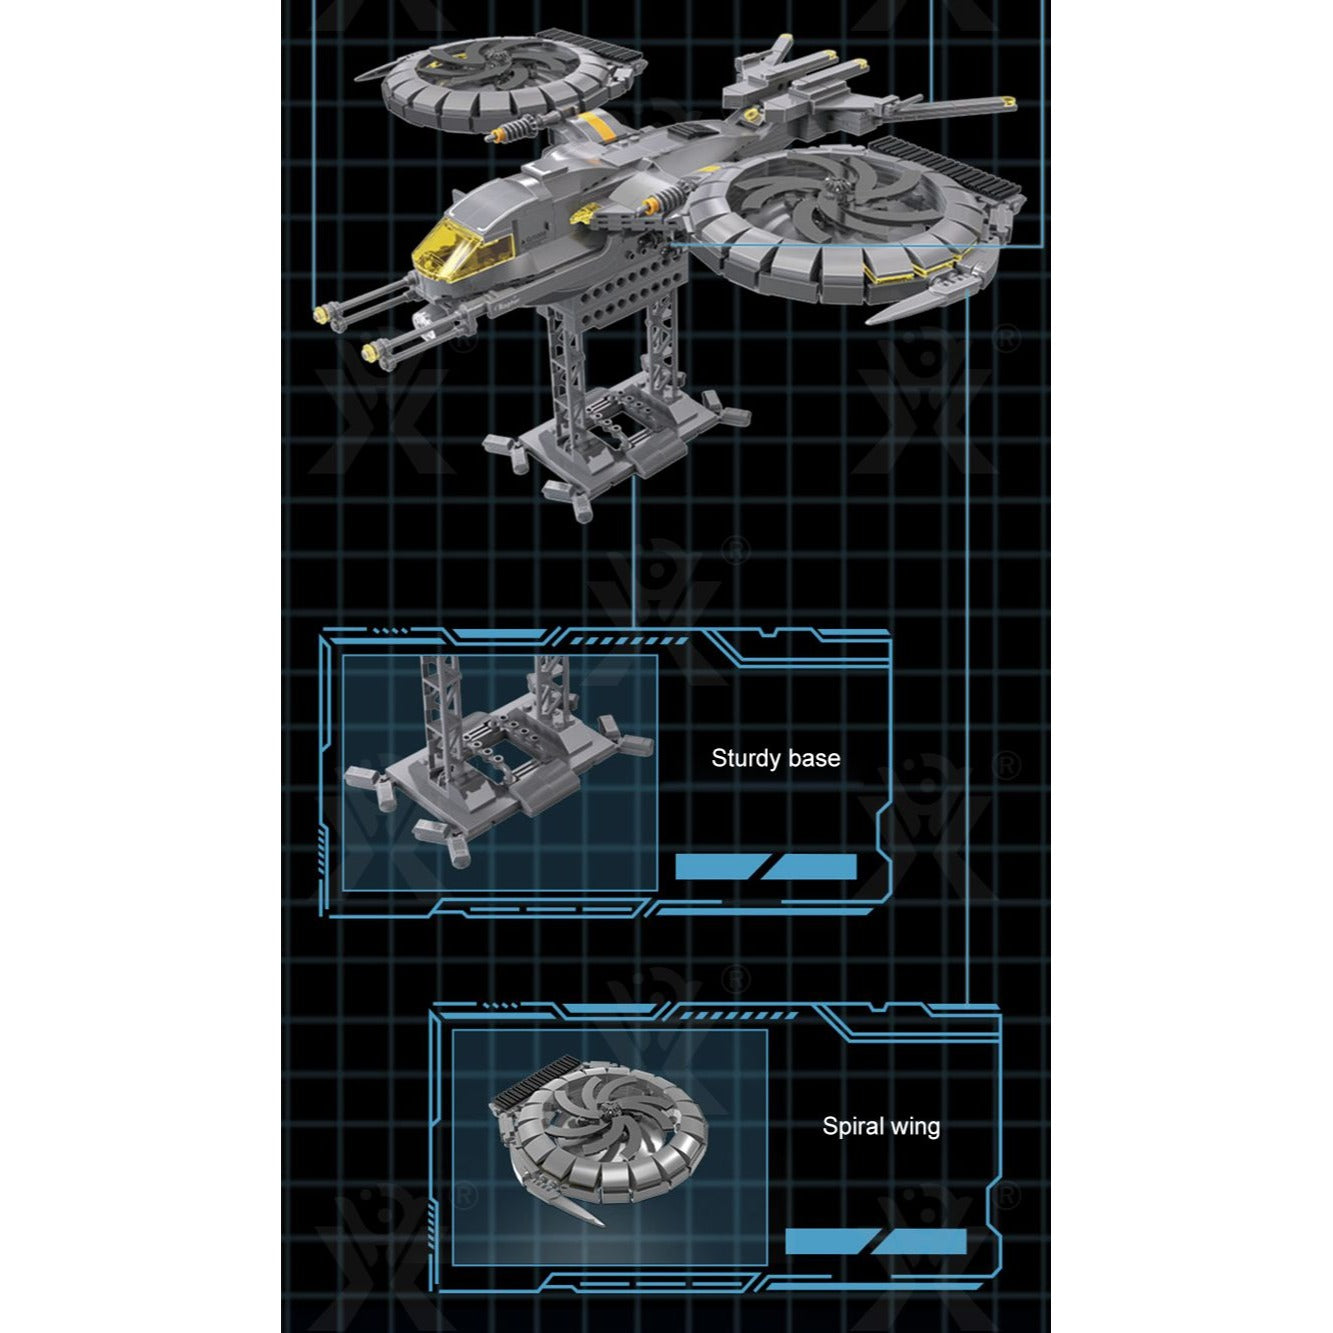 Raptor Attack Chopper, Avatar, World of Pandora. New 887 Pieces, Lego Compatible